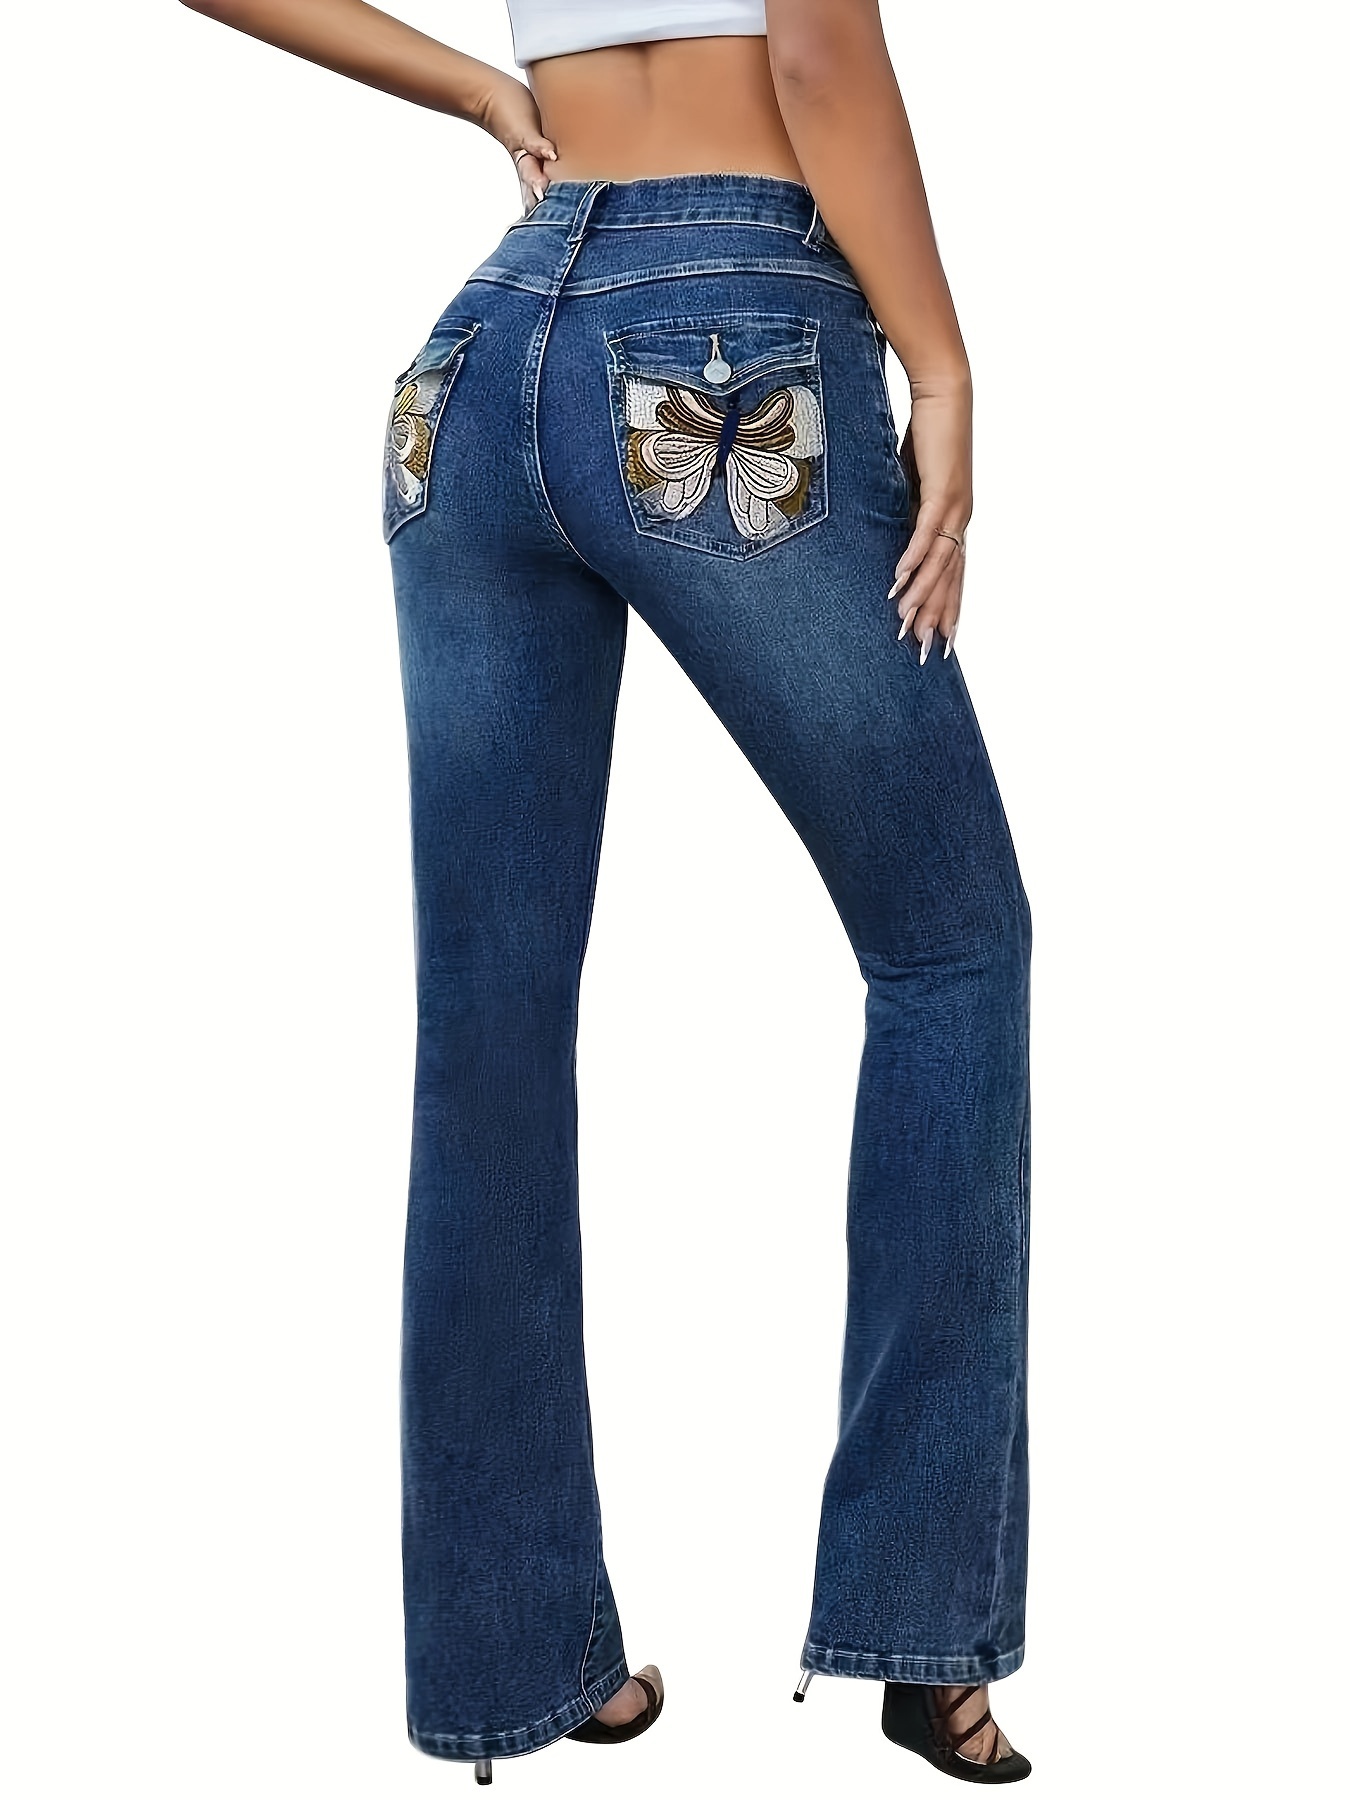 wybzd Women's Bell Bottom Jeans High Waisted Stretch Slim Fit Flare Denim  Pants Light Blue M